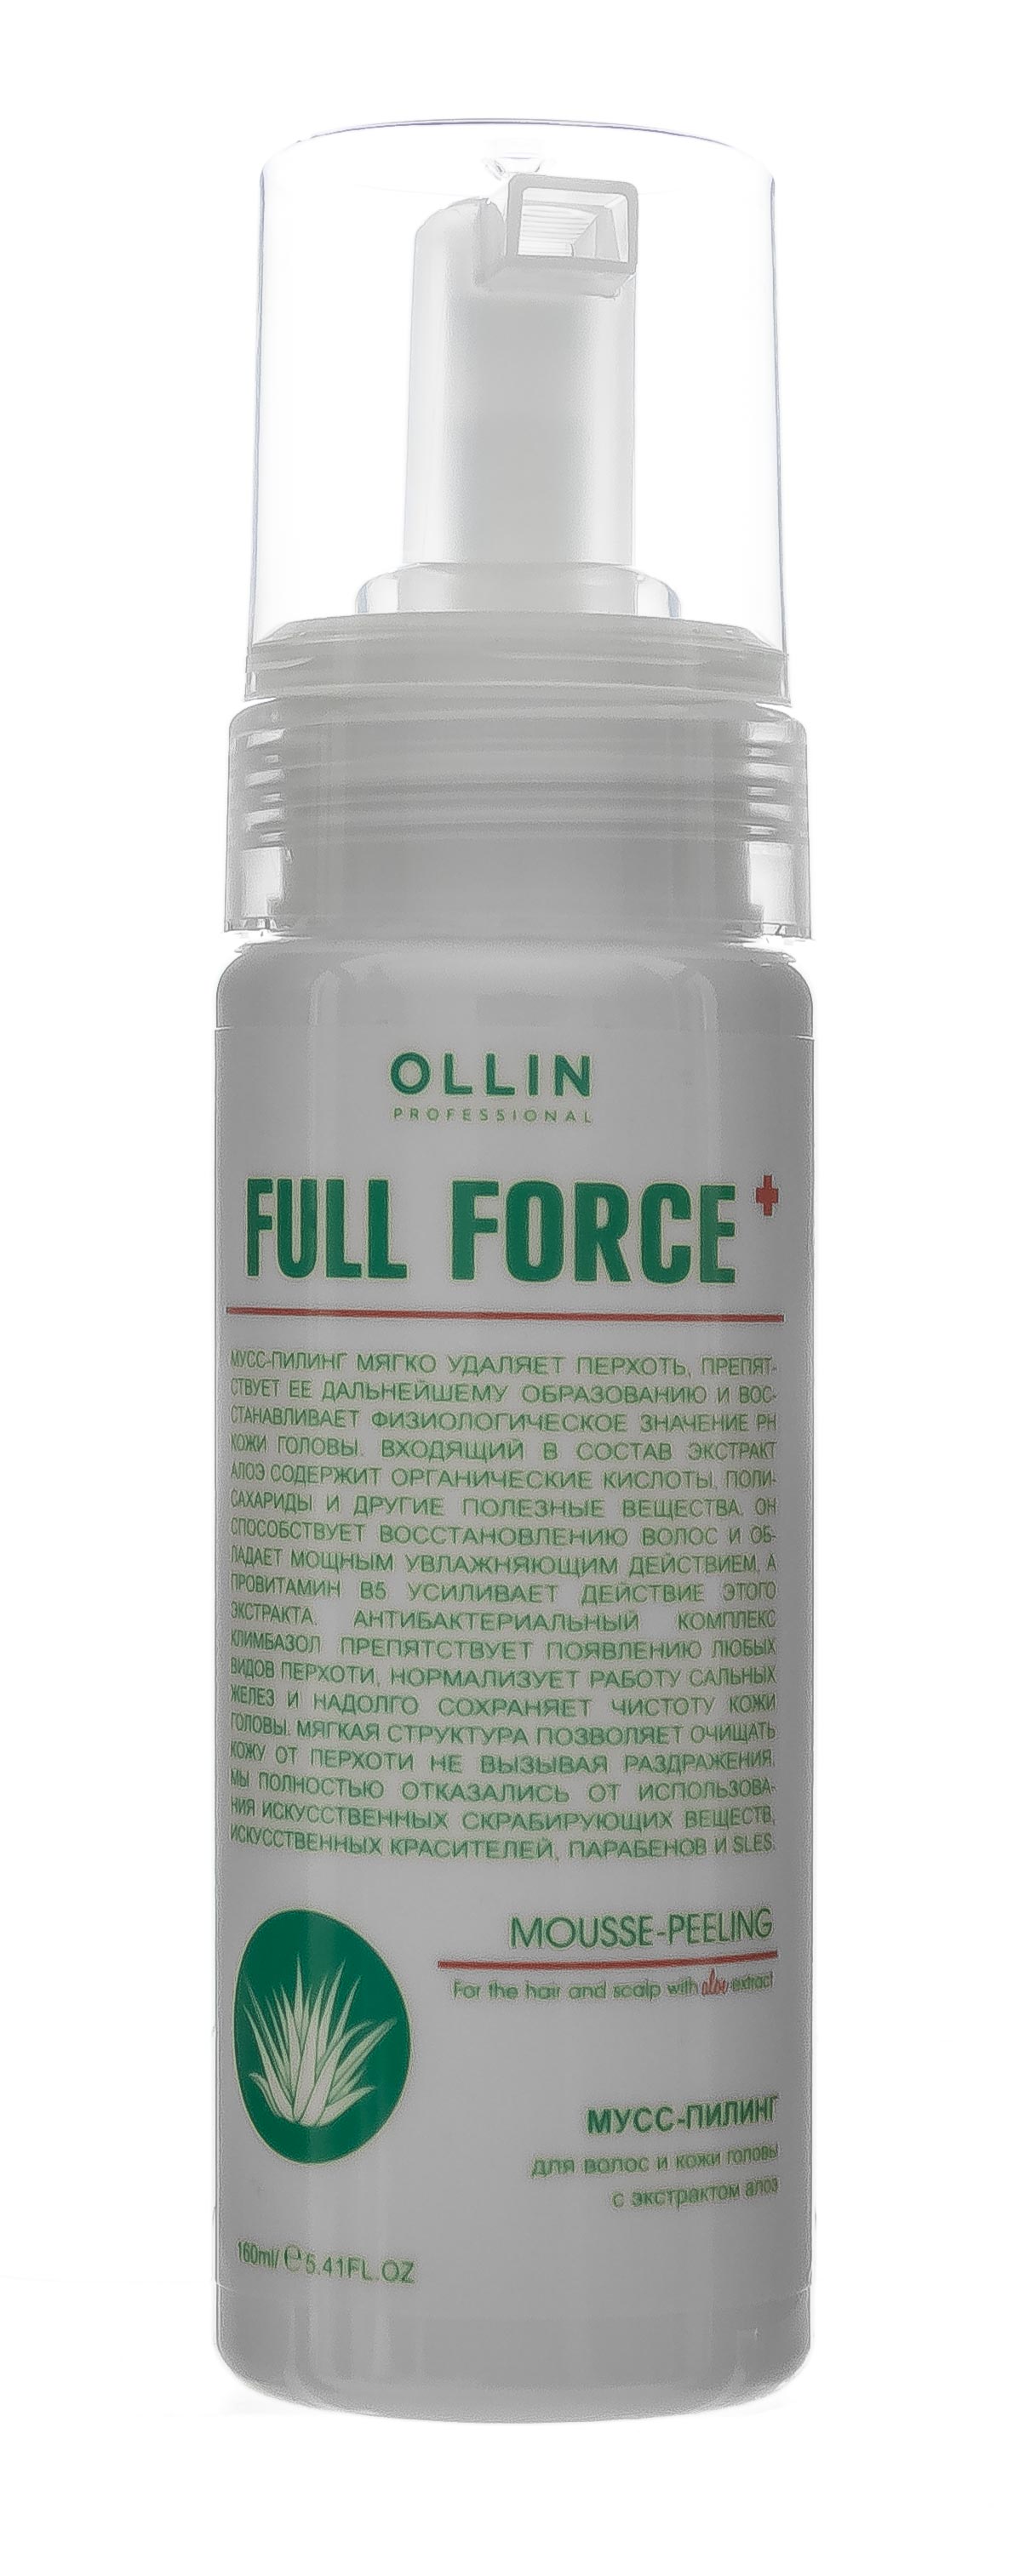 Ollin Professional Мусс-пилинг для волос и кожи головы с экстрактом алоэ, 160 мл (Ollin Professional, Full Force) цена и фото